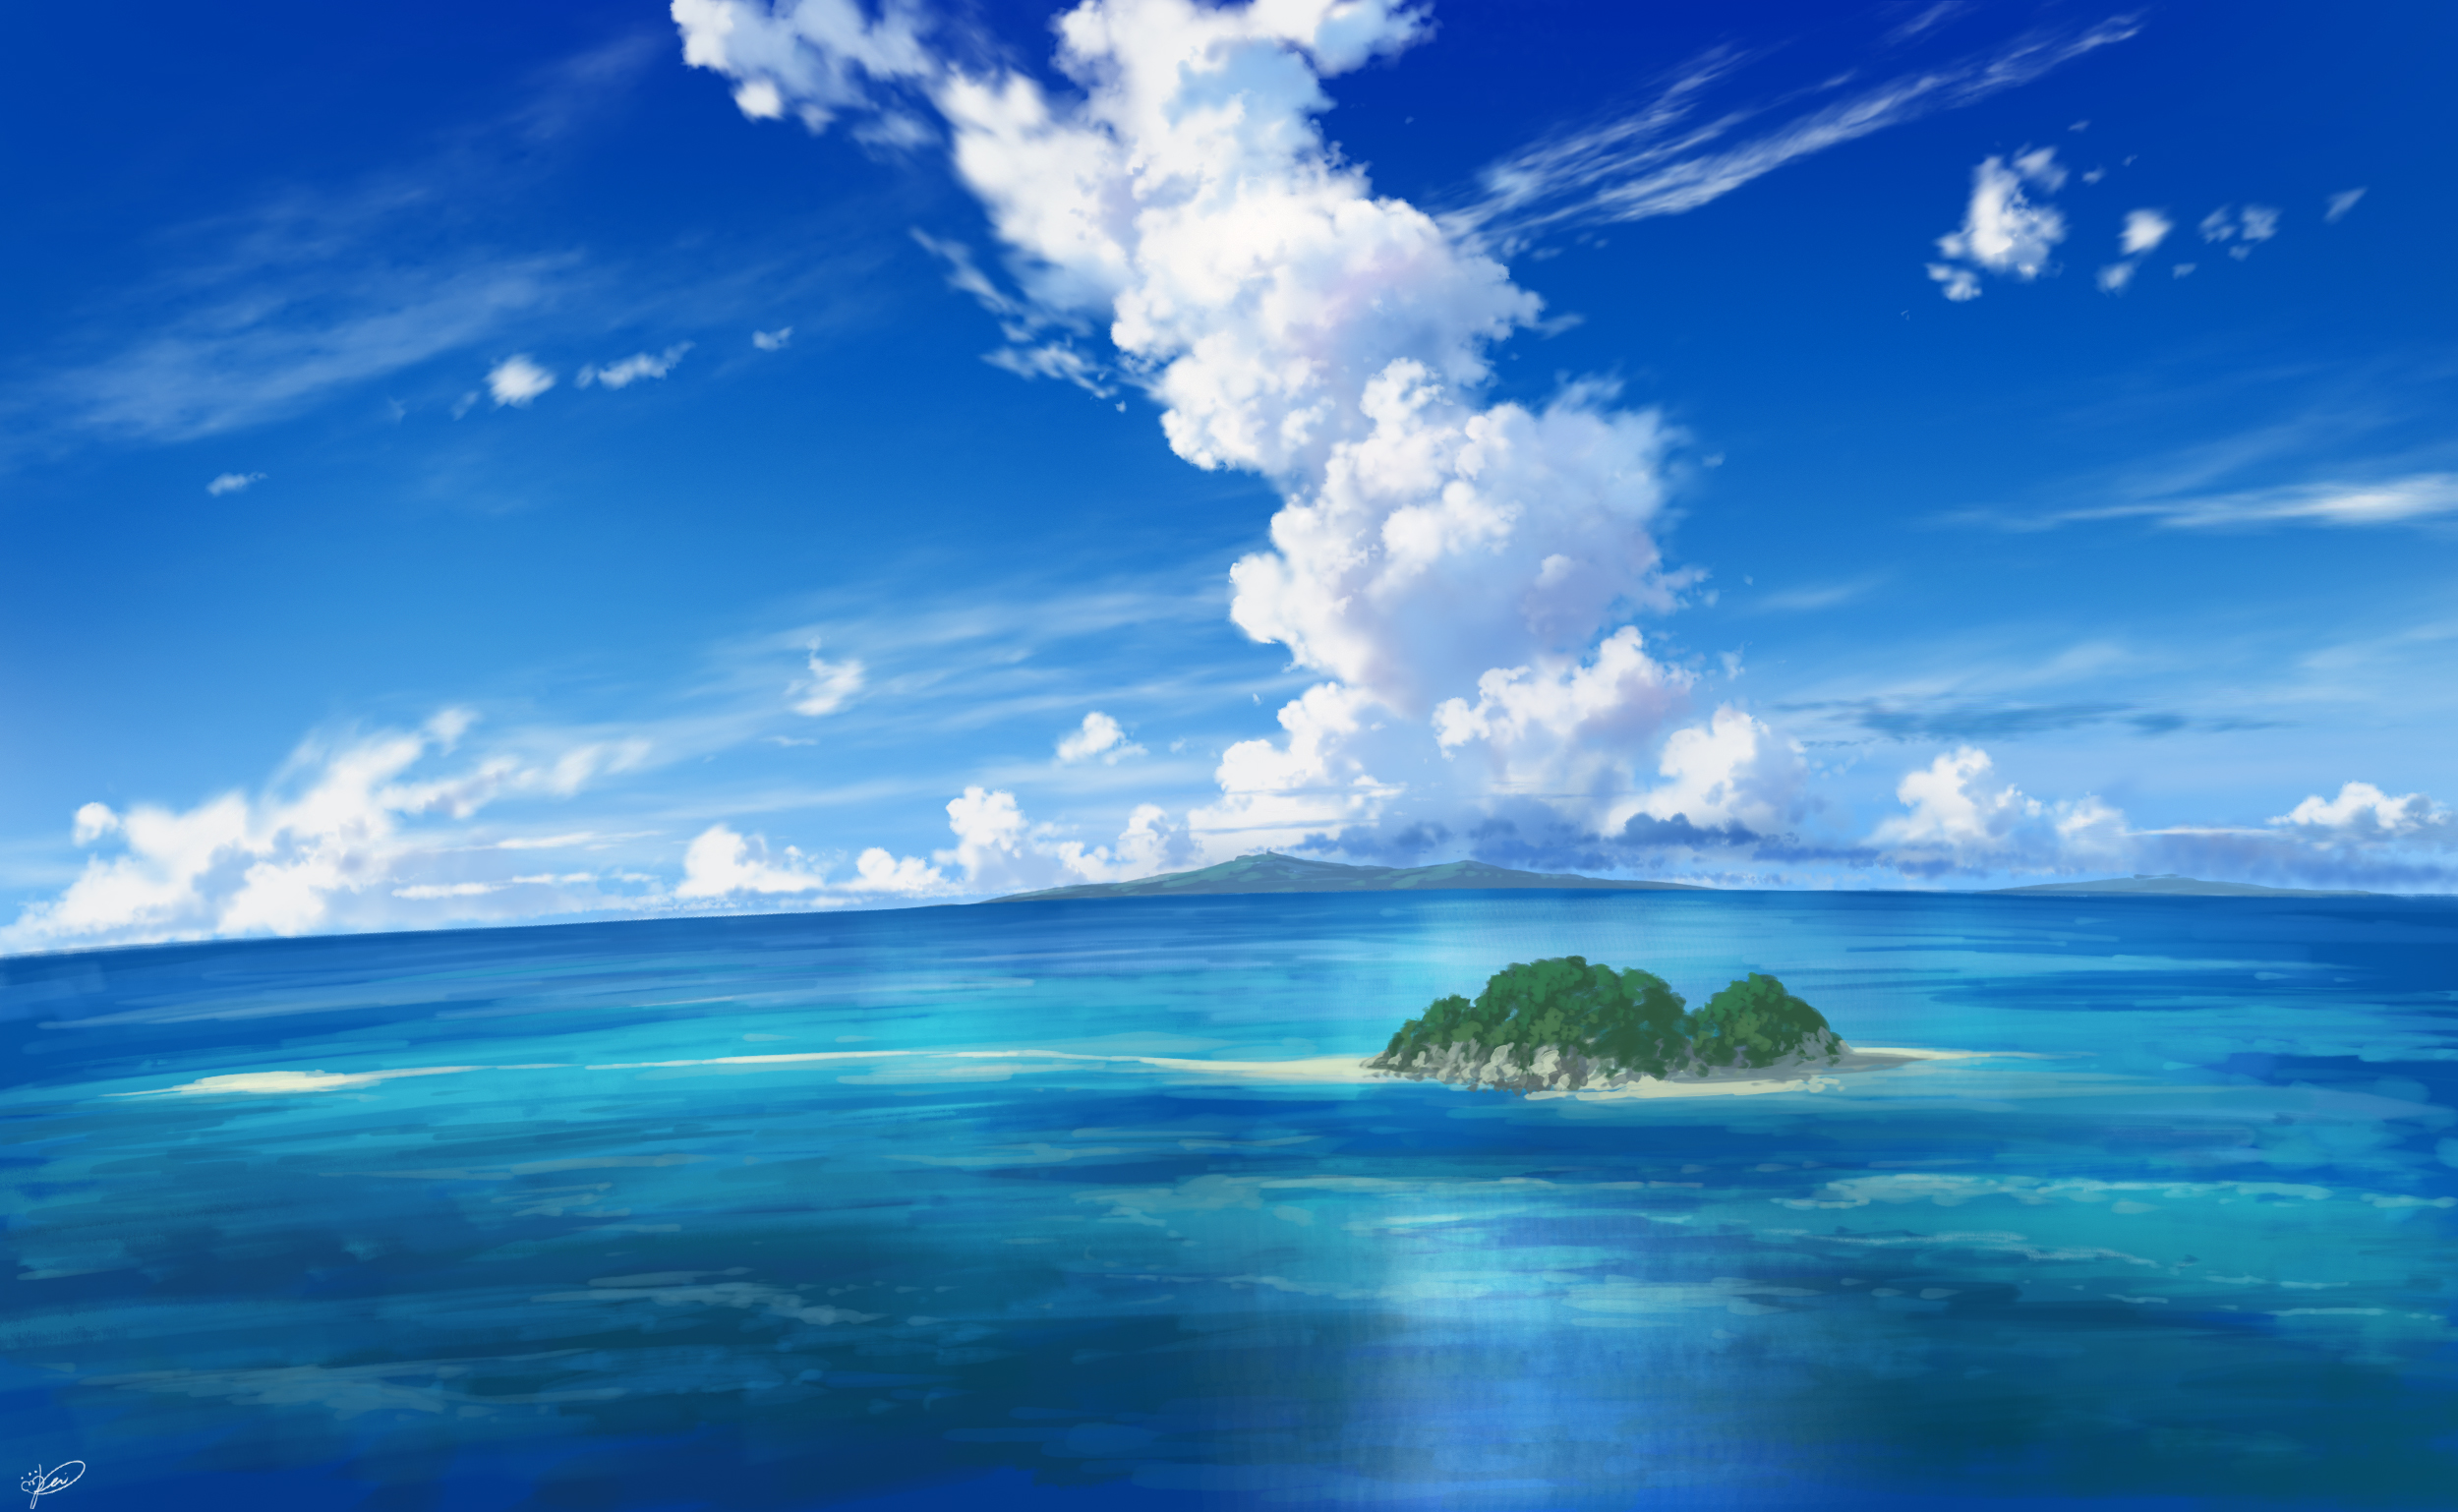 General 2500x1538 waterscape island water clouds sea pei (sumurai) signature beach horizon sky